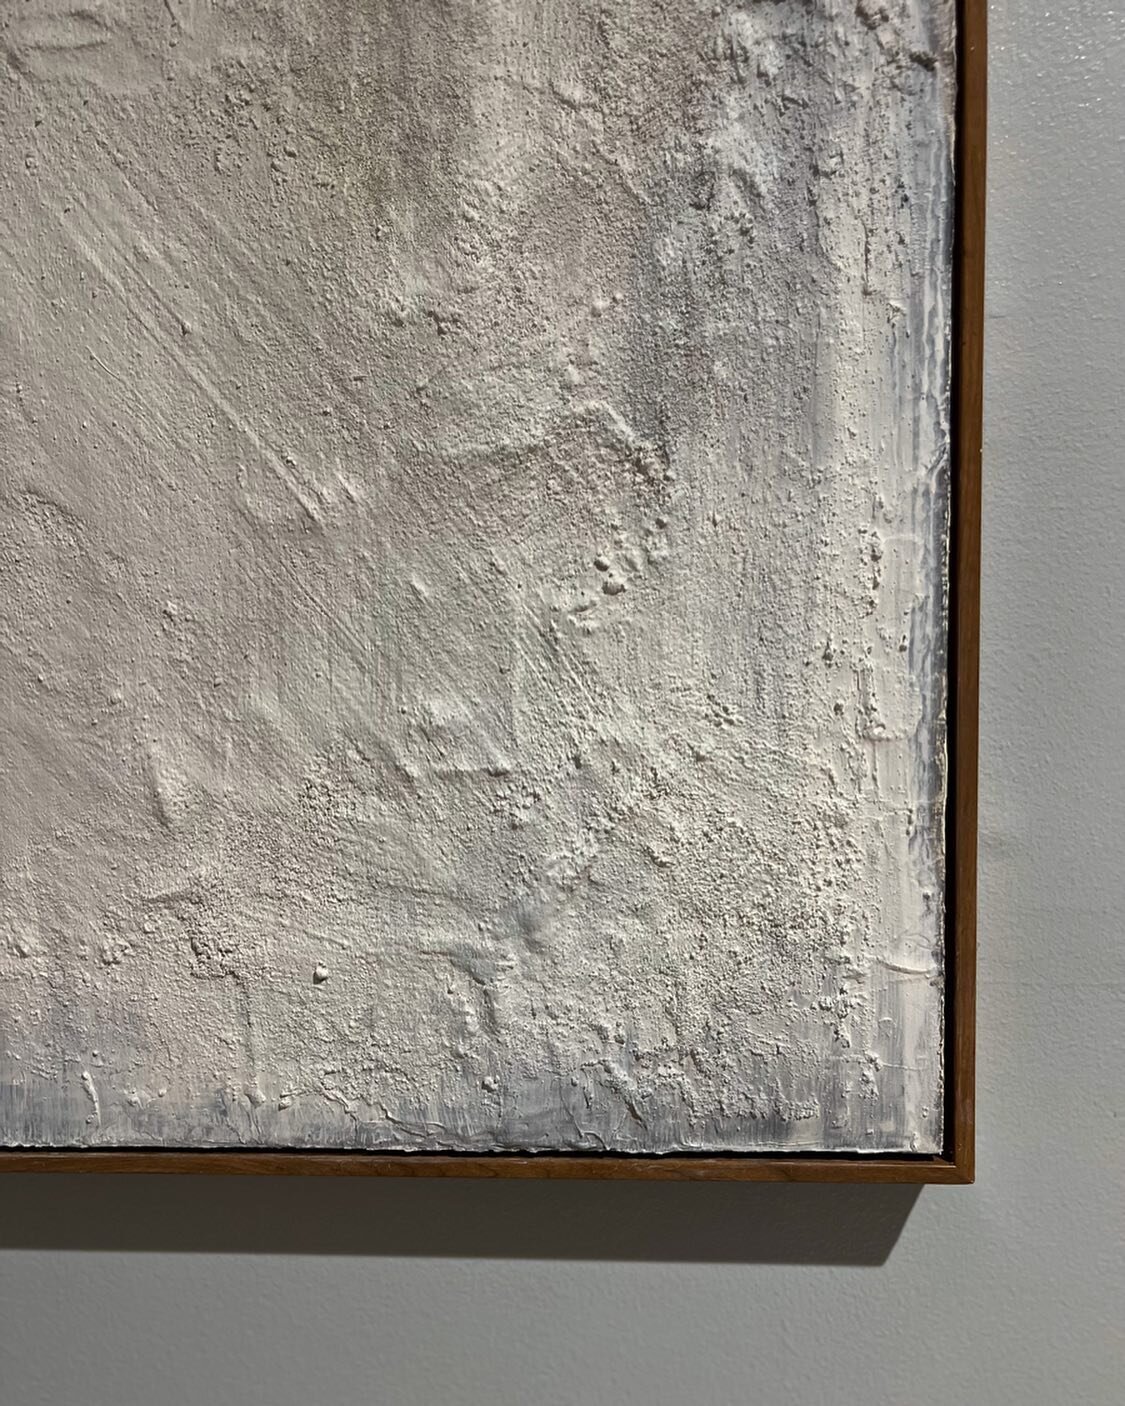 just a snapshot of a work in progress inspired by the full moon 🌕 

#wip #abstractart #abstractartist #texturedart #philadelphiaartist